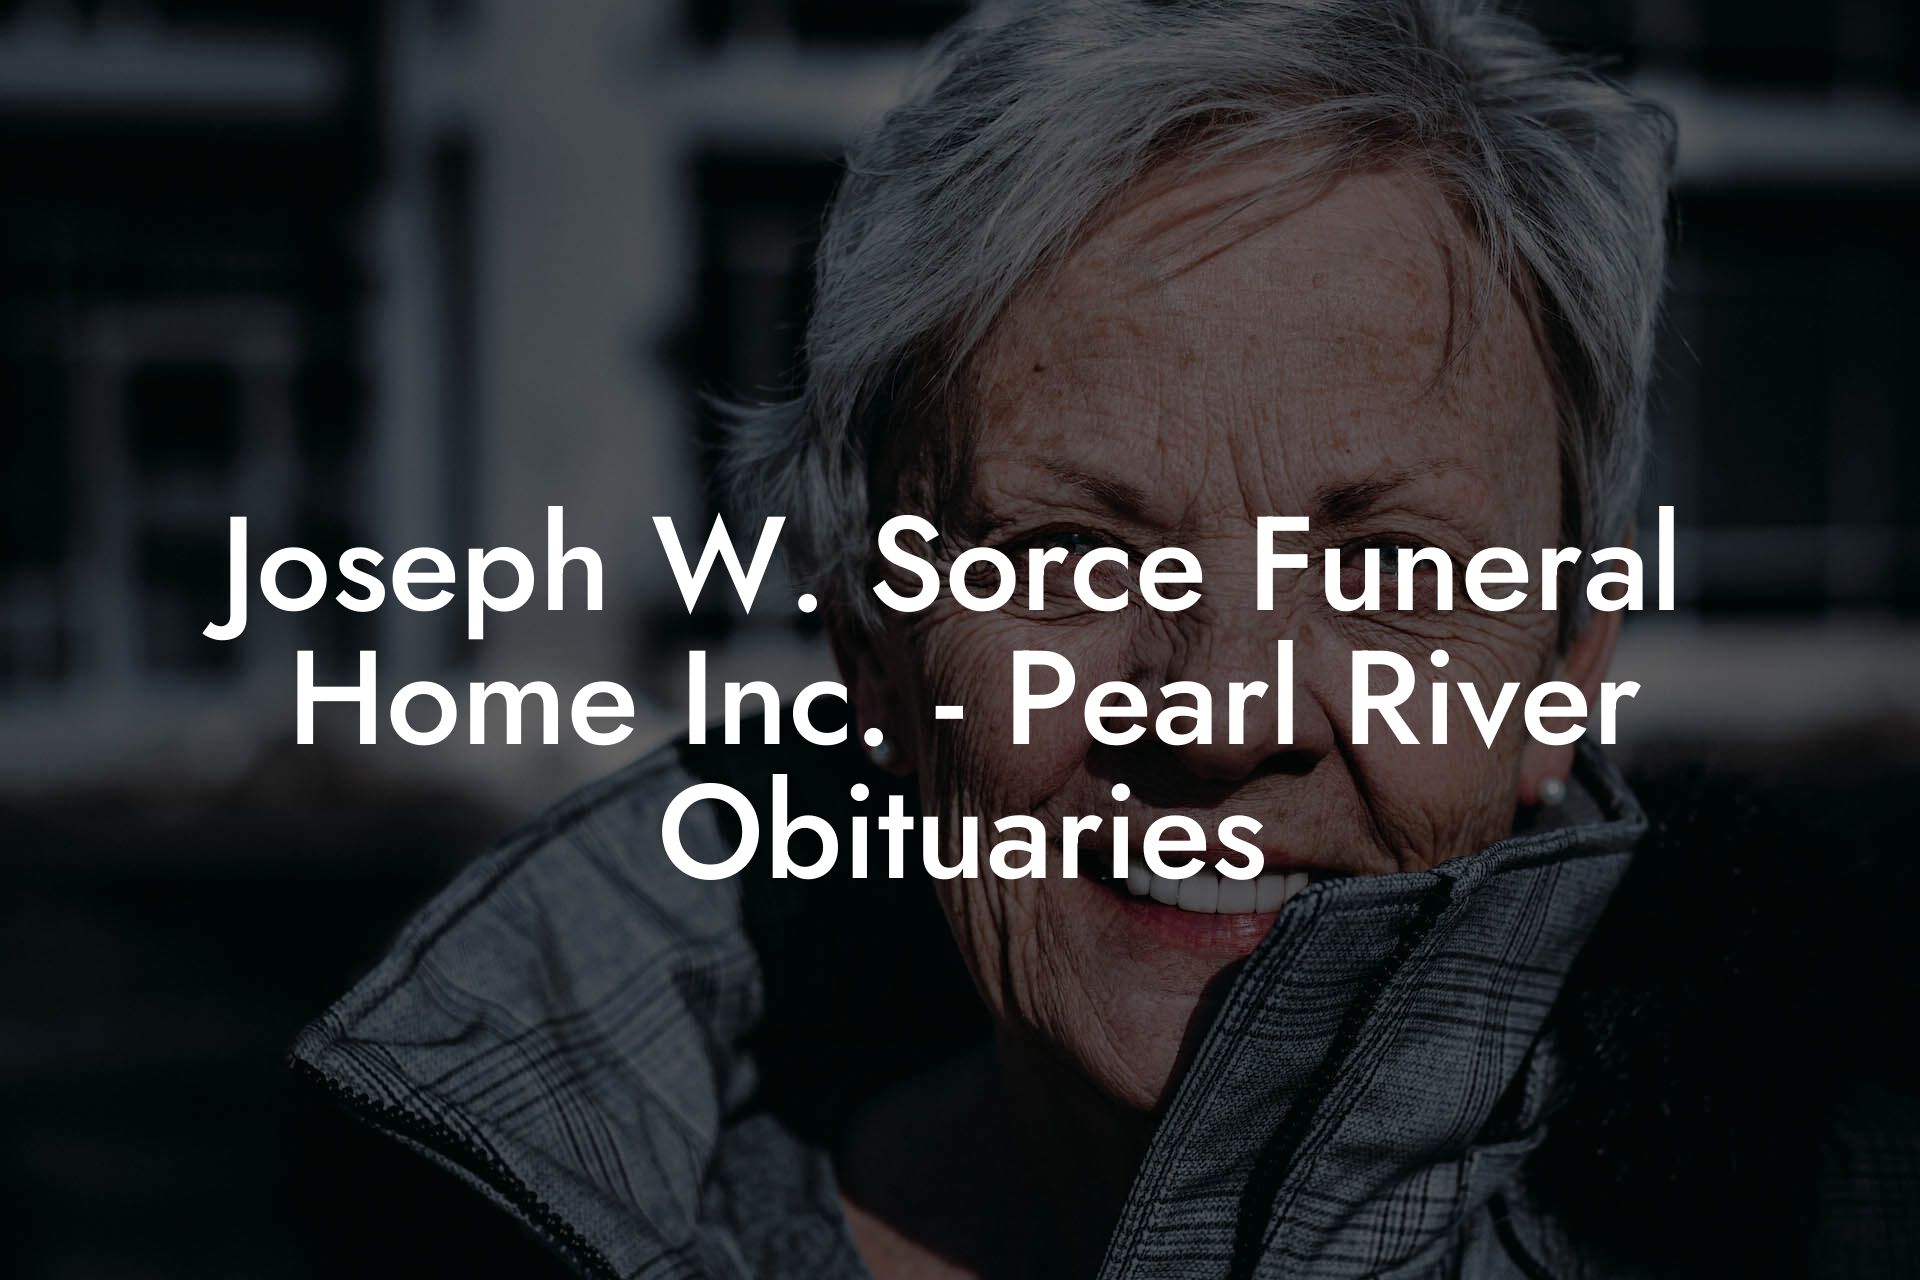 Joseph W. Sorce Funeral Home Inc. - Pearl River Obituaries